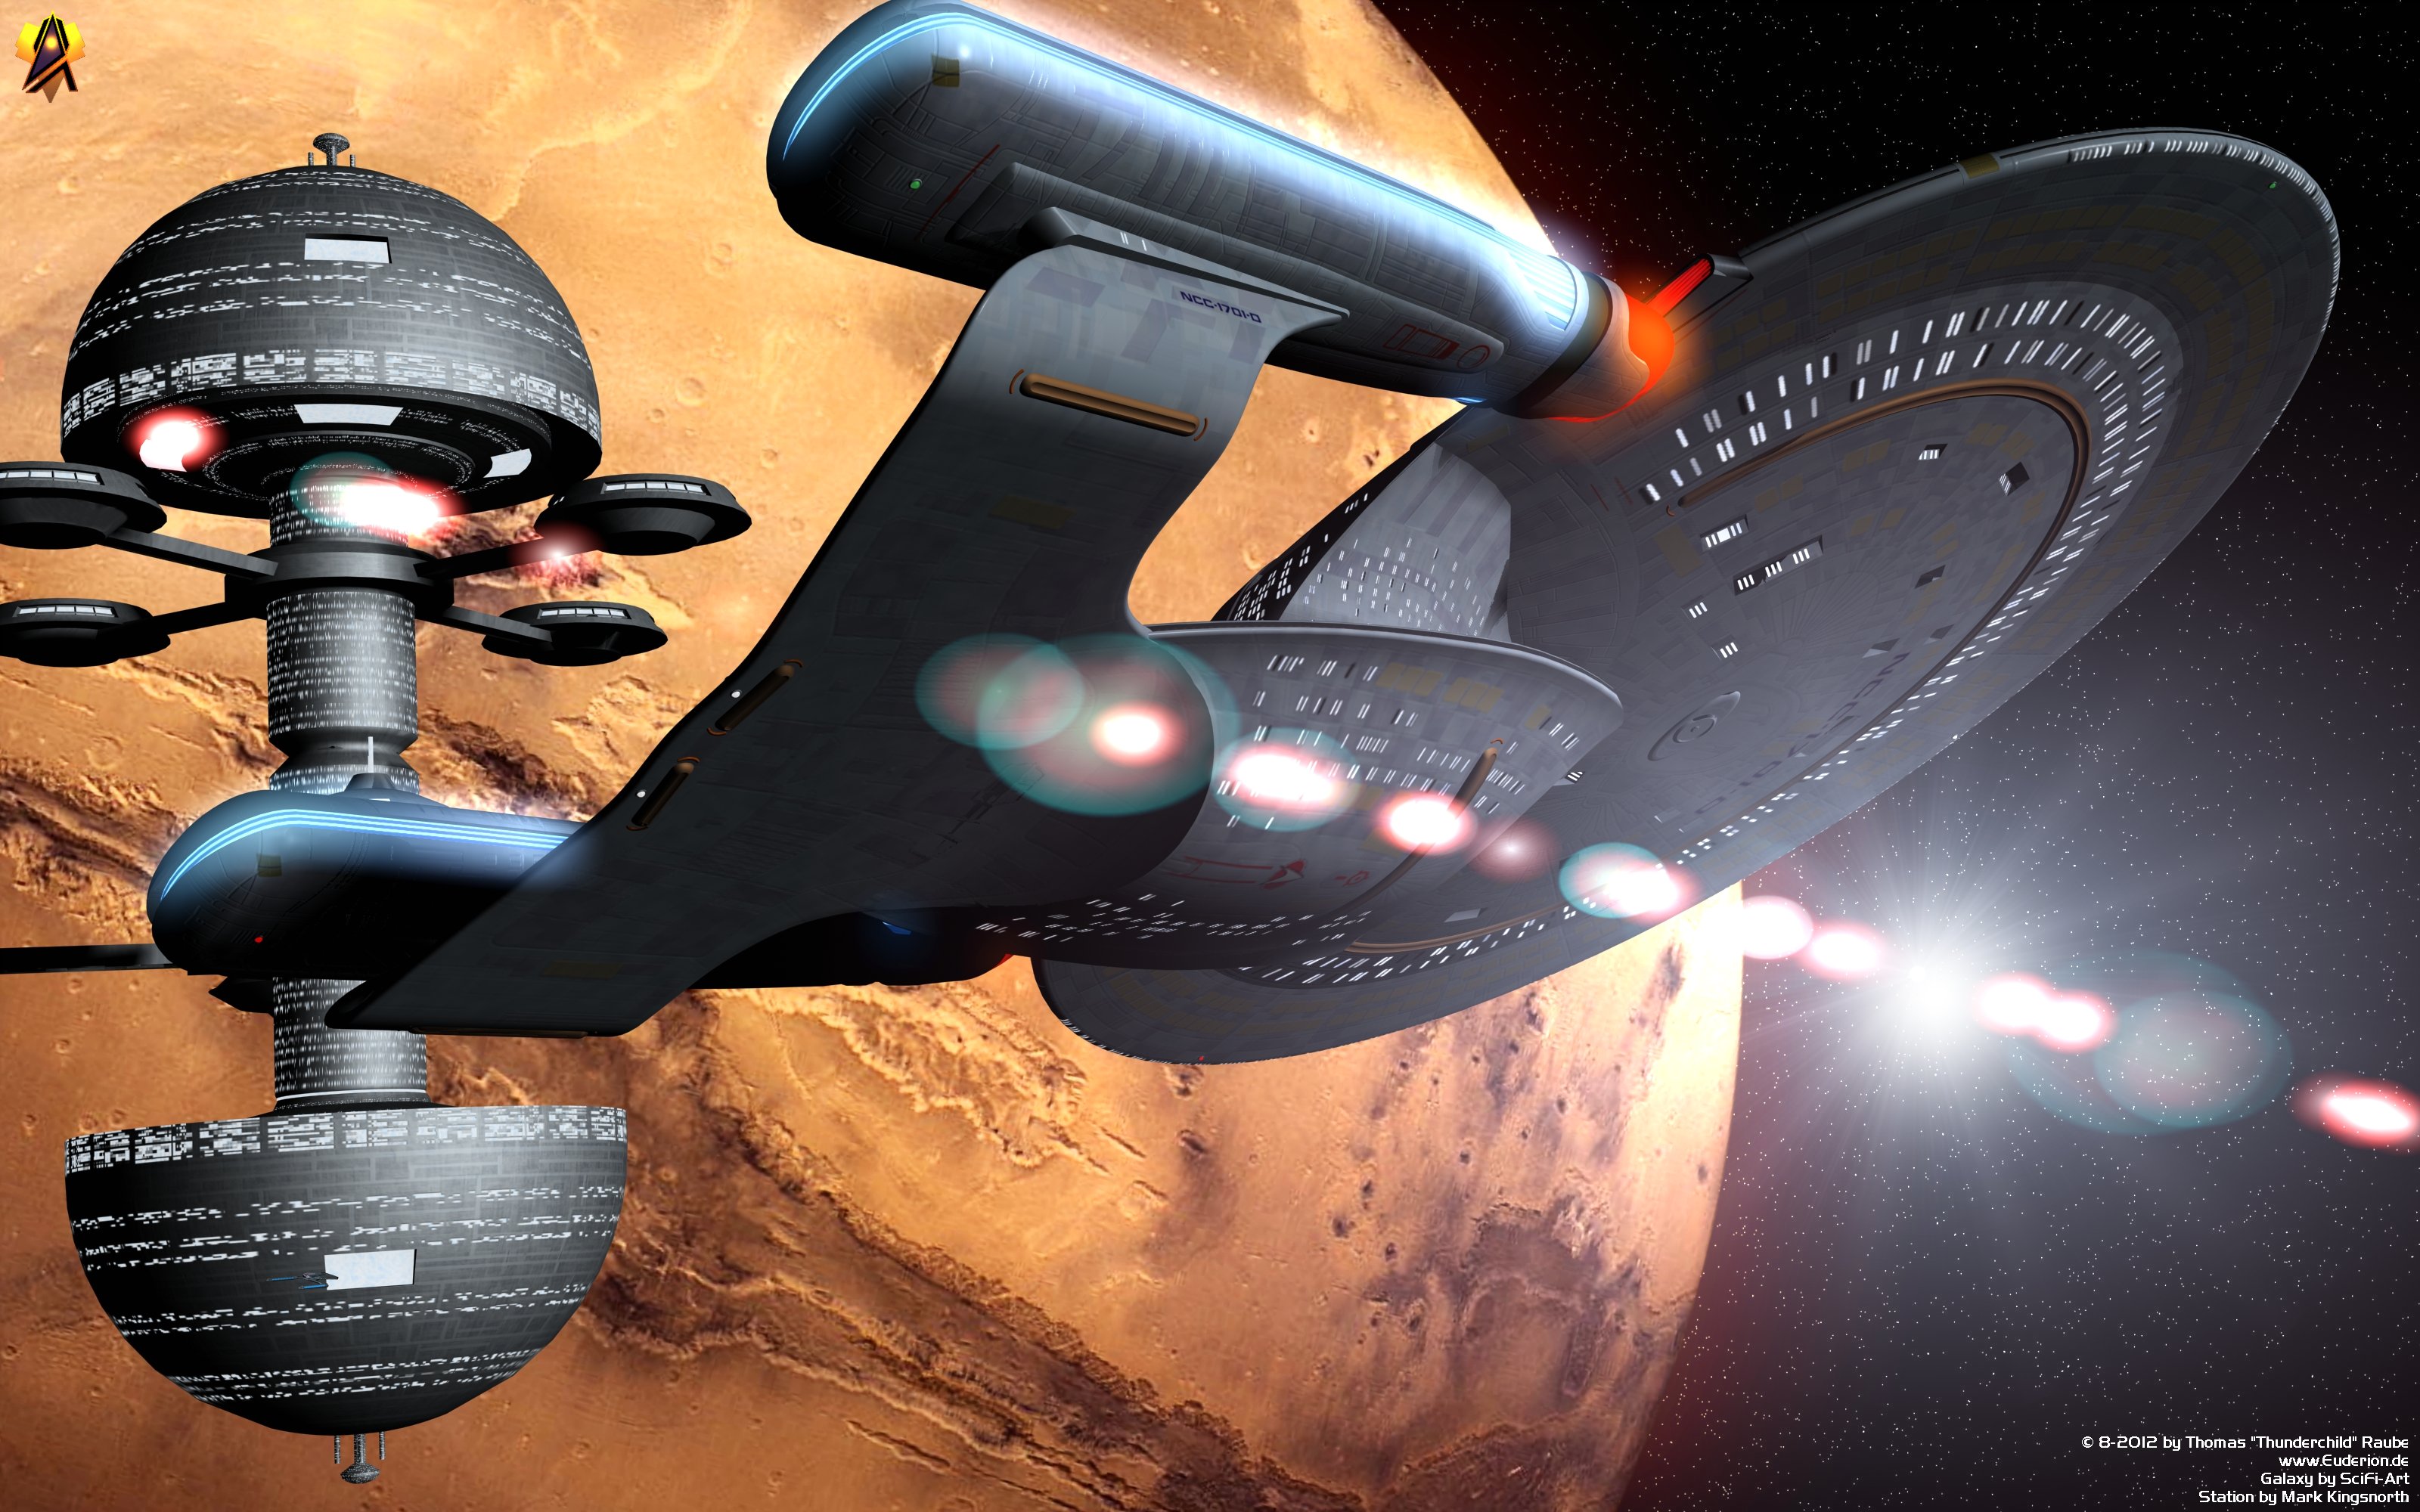 enterprise (star trek), starship, tv show, star trek: the original series, sci fi, space, spaceship, star trek